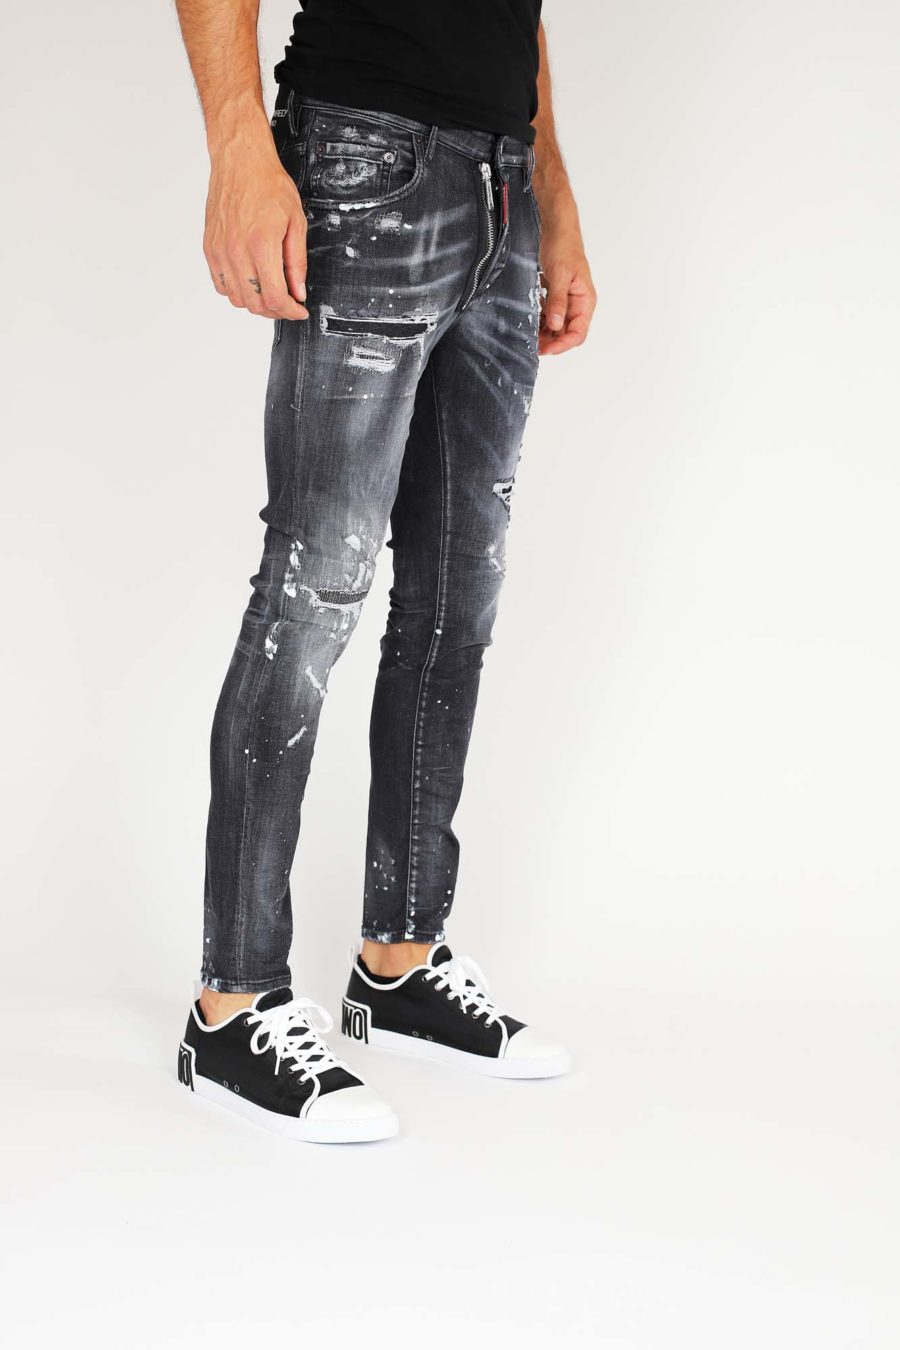 Jeans "Super Twinky Jean" mit Reißverschluss - IMG 9859